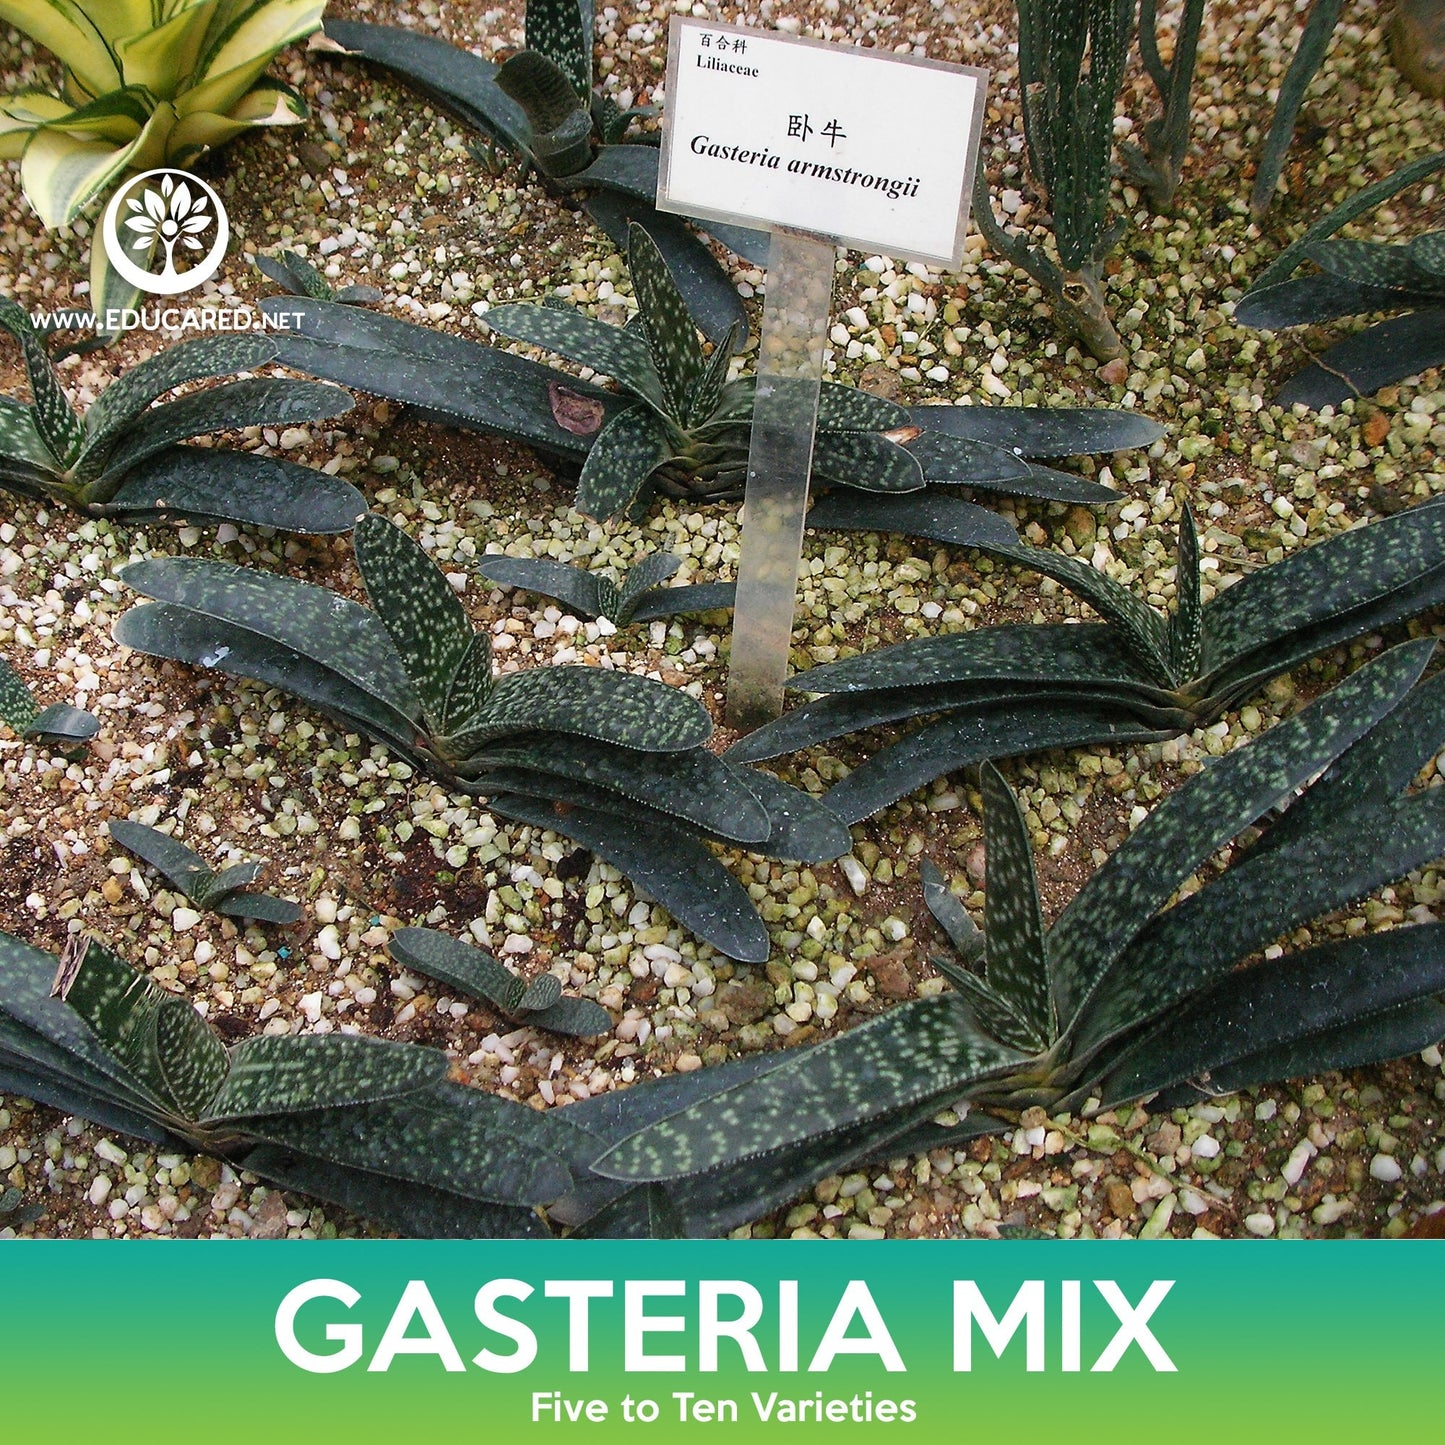 Gasteria Succulent Mix Seeds